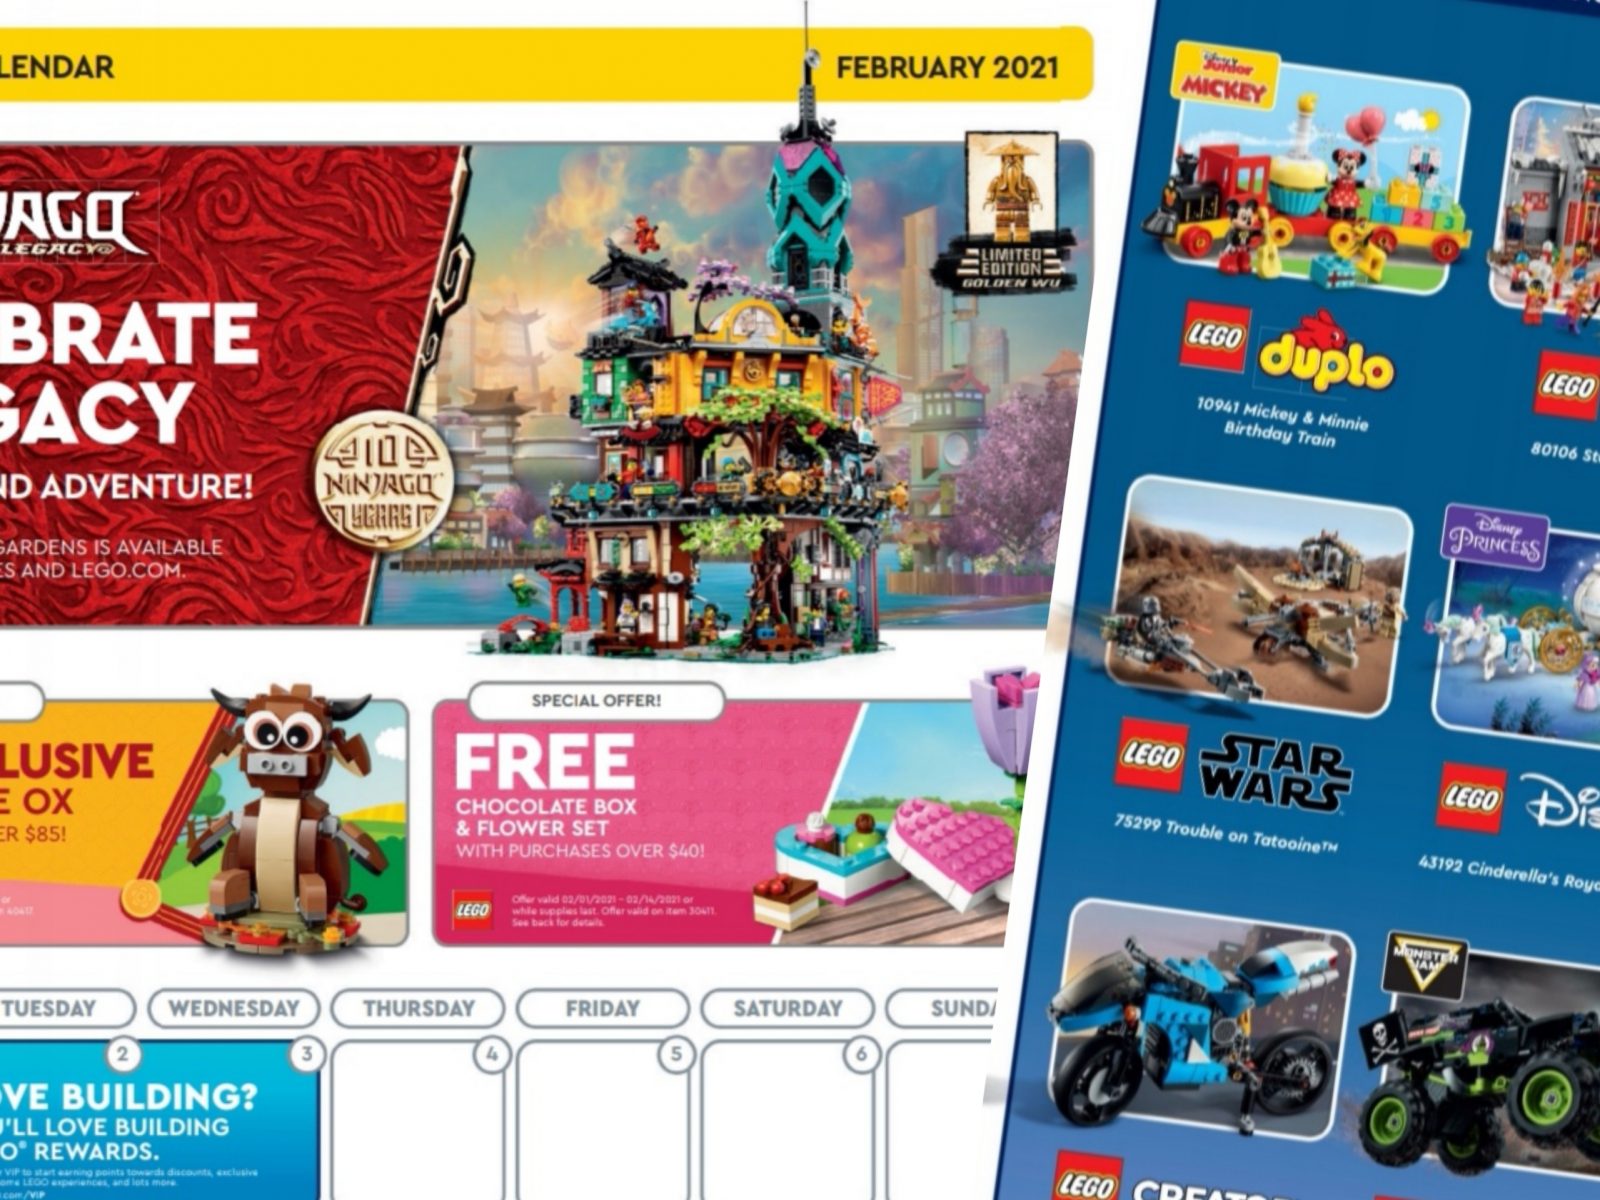 March LEGO Store Calendar Confirms Amelia Earhart GWP! The Brick Post!